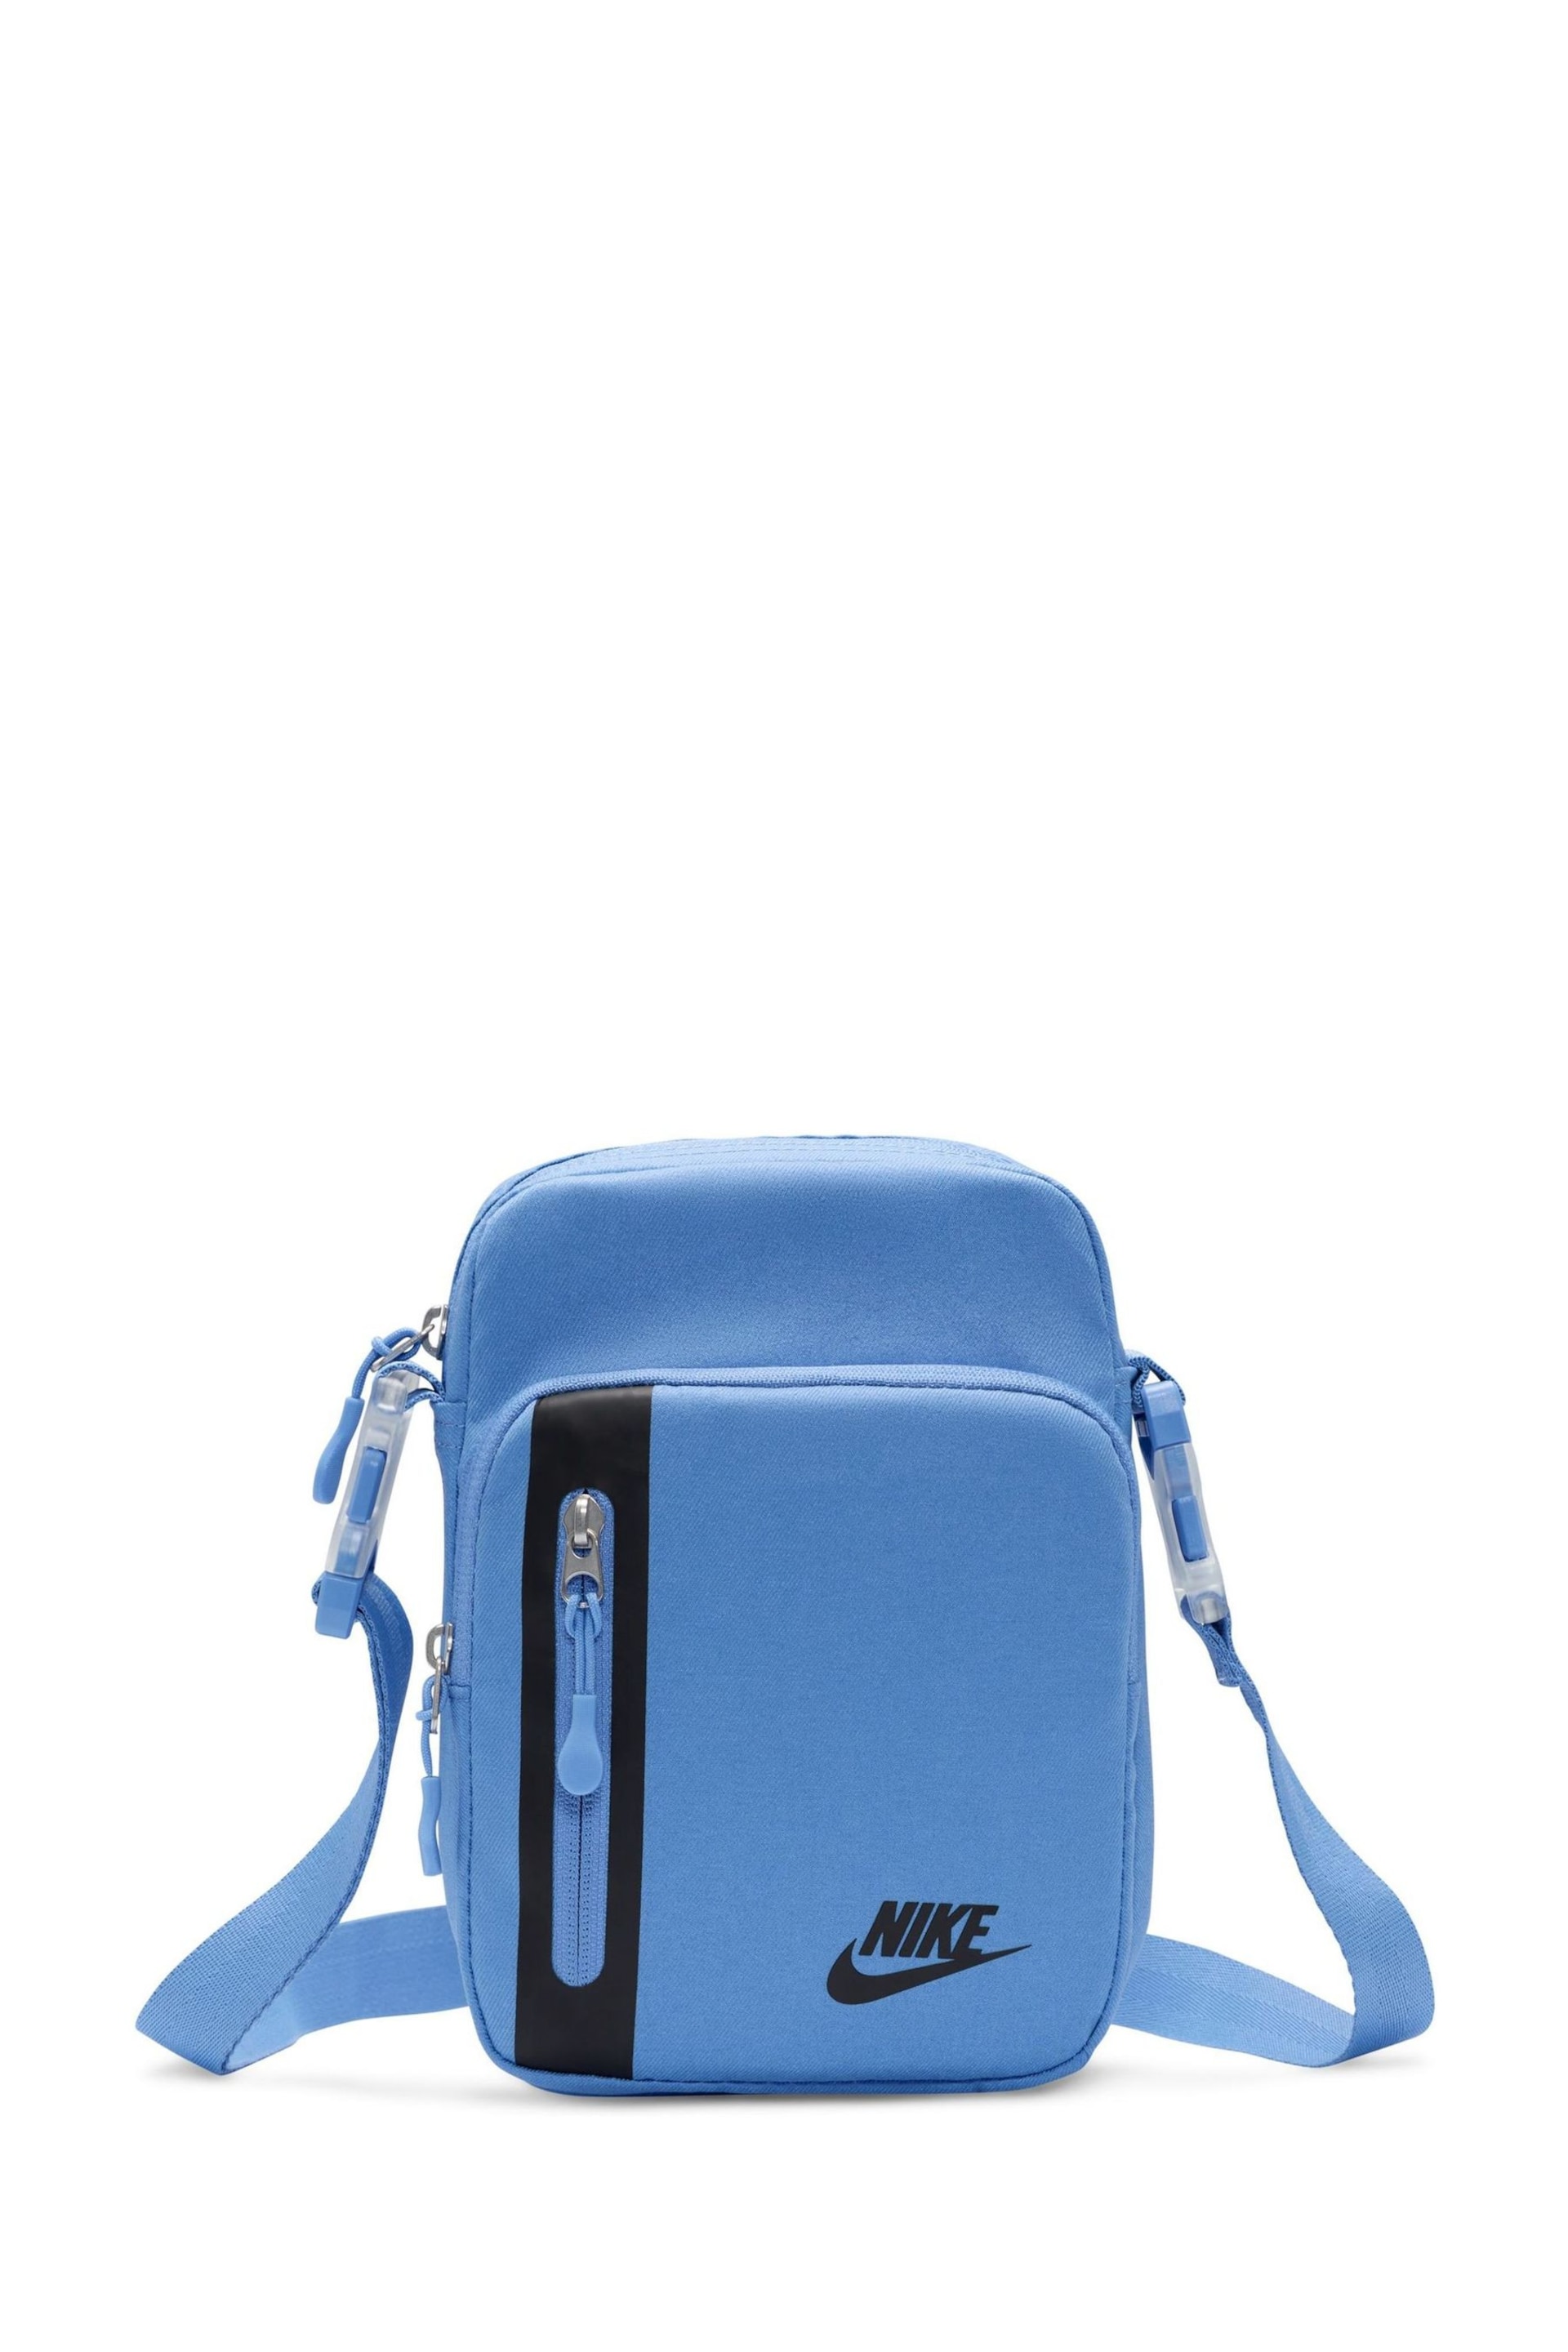 Nike Blue Elemental Premium Crossb-Bdy Bag 4L - Image 3 of 10